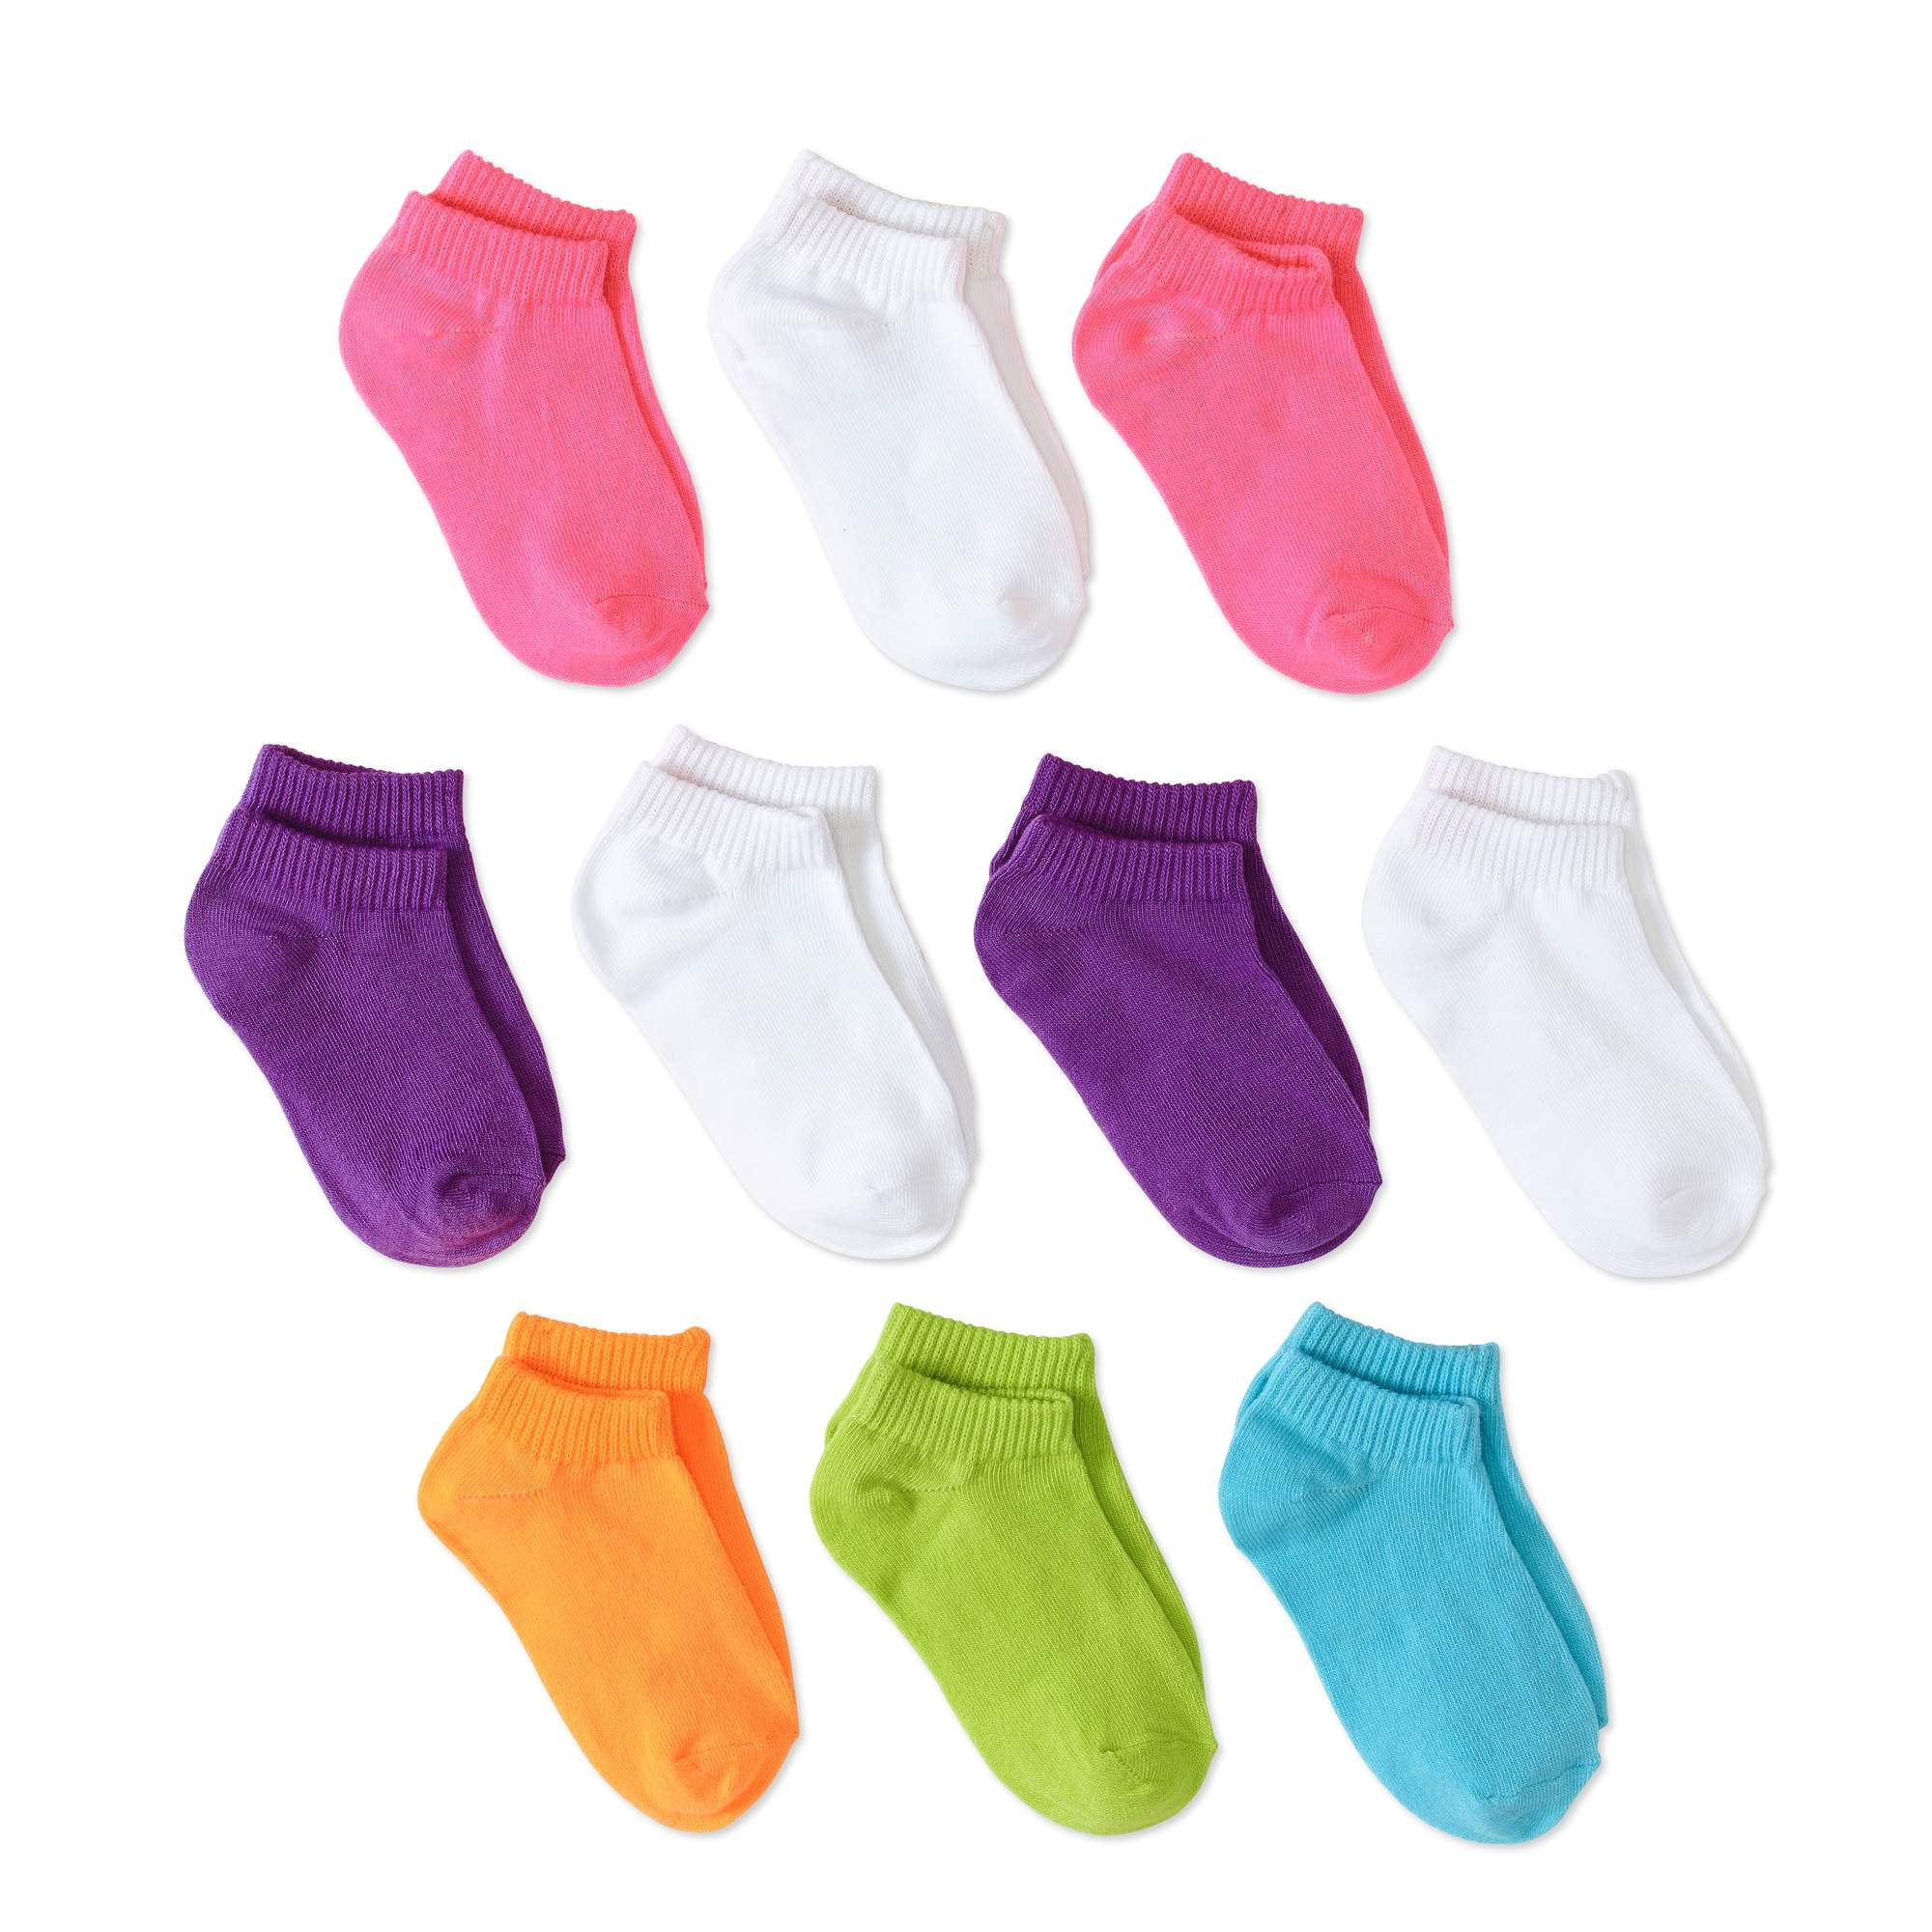 20 Pairs Hanes Girls/' Low-Cut EZ Sort® Socks Assorted G42//10